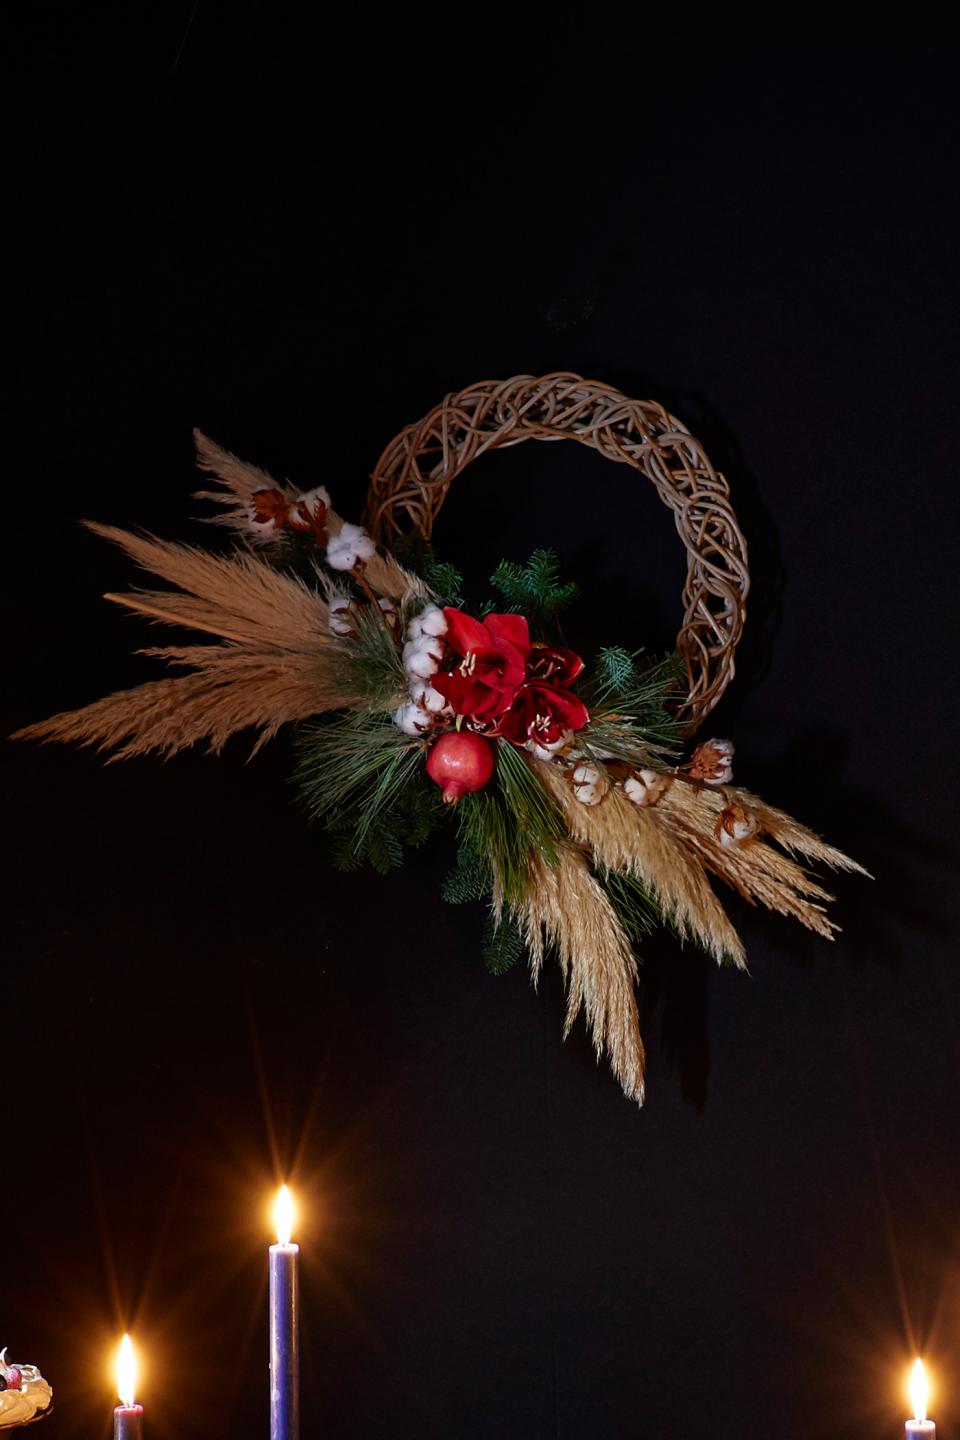 Bohemian Christmas Celebration in Moody Tones- Christmas Wreath